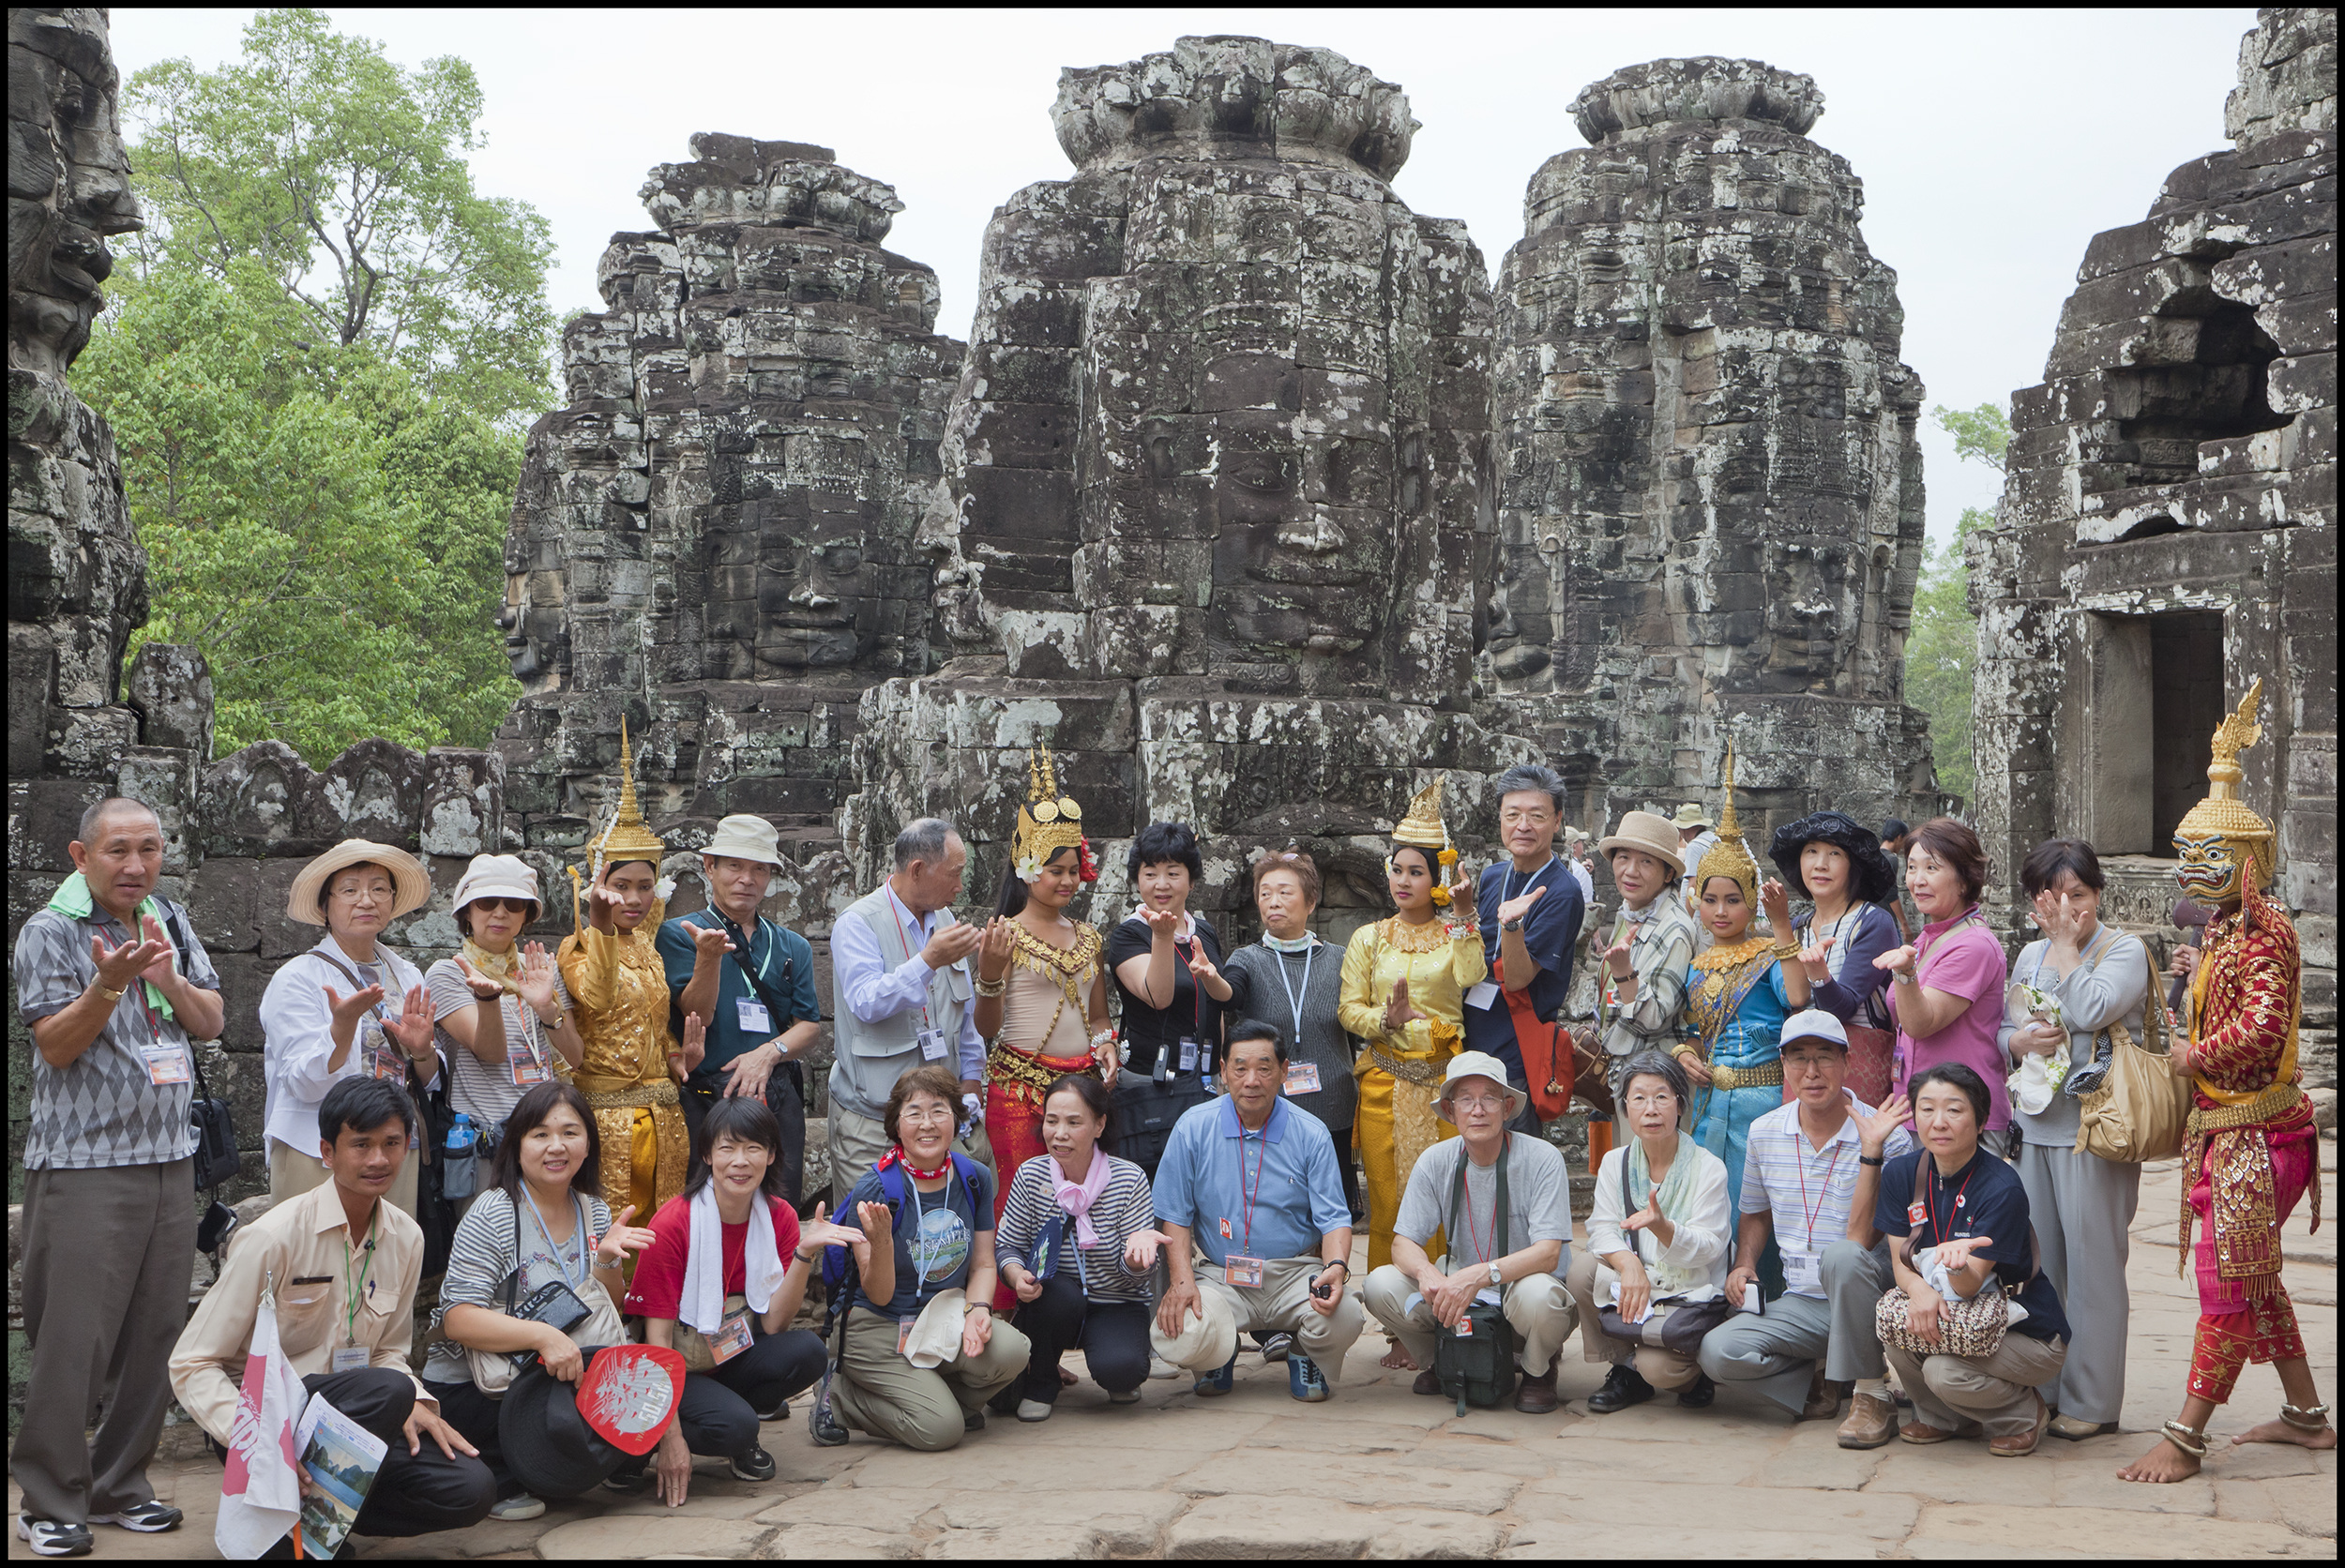 Angkor Wat tourists 18 inch.jpg